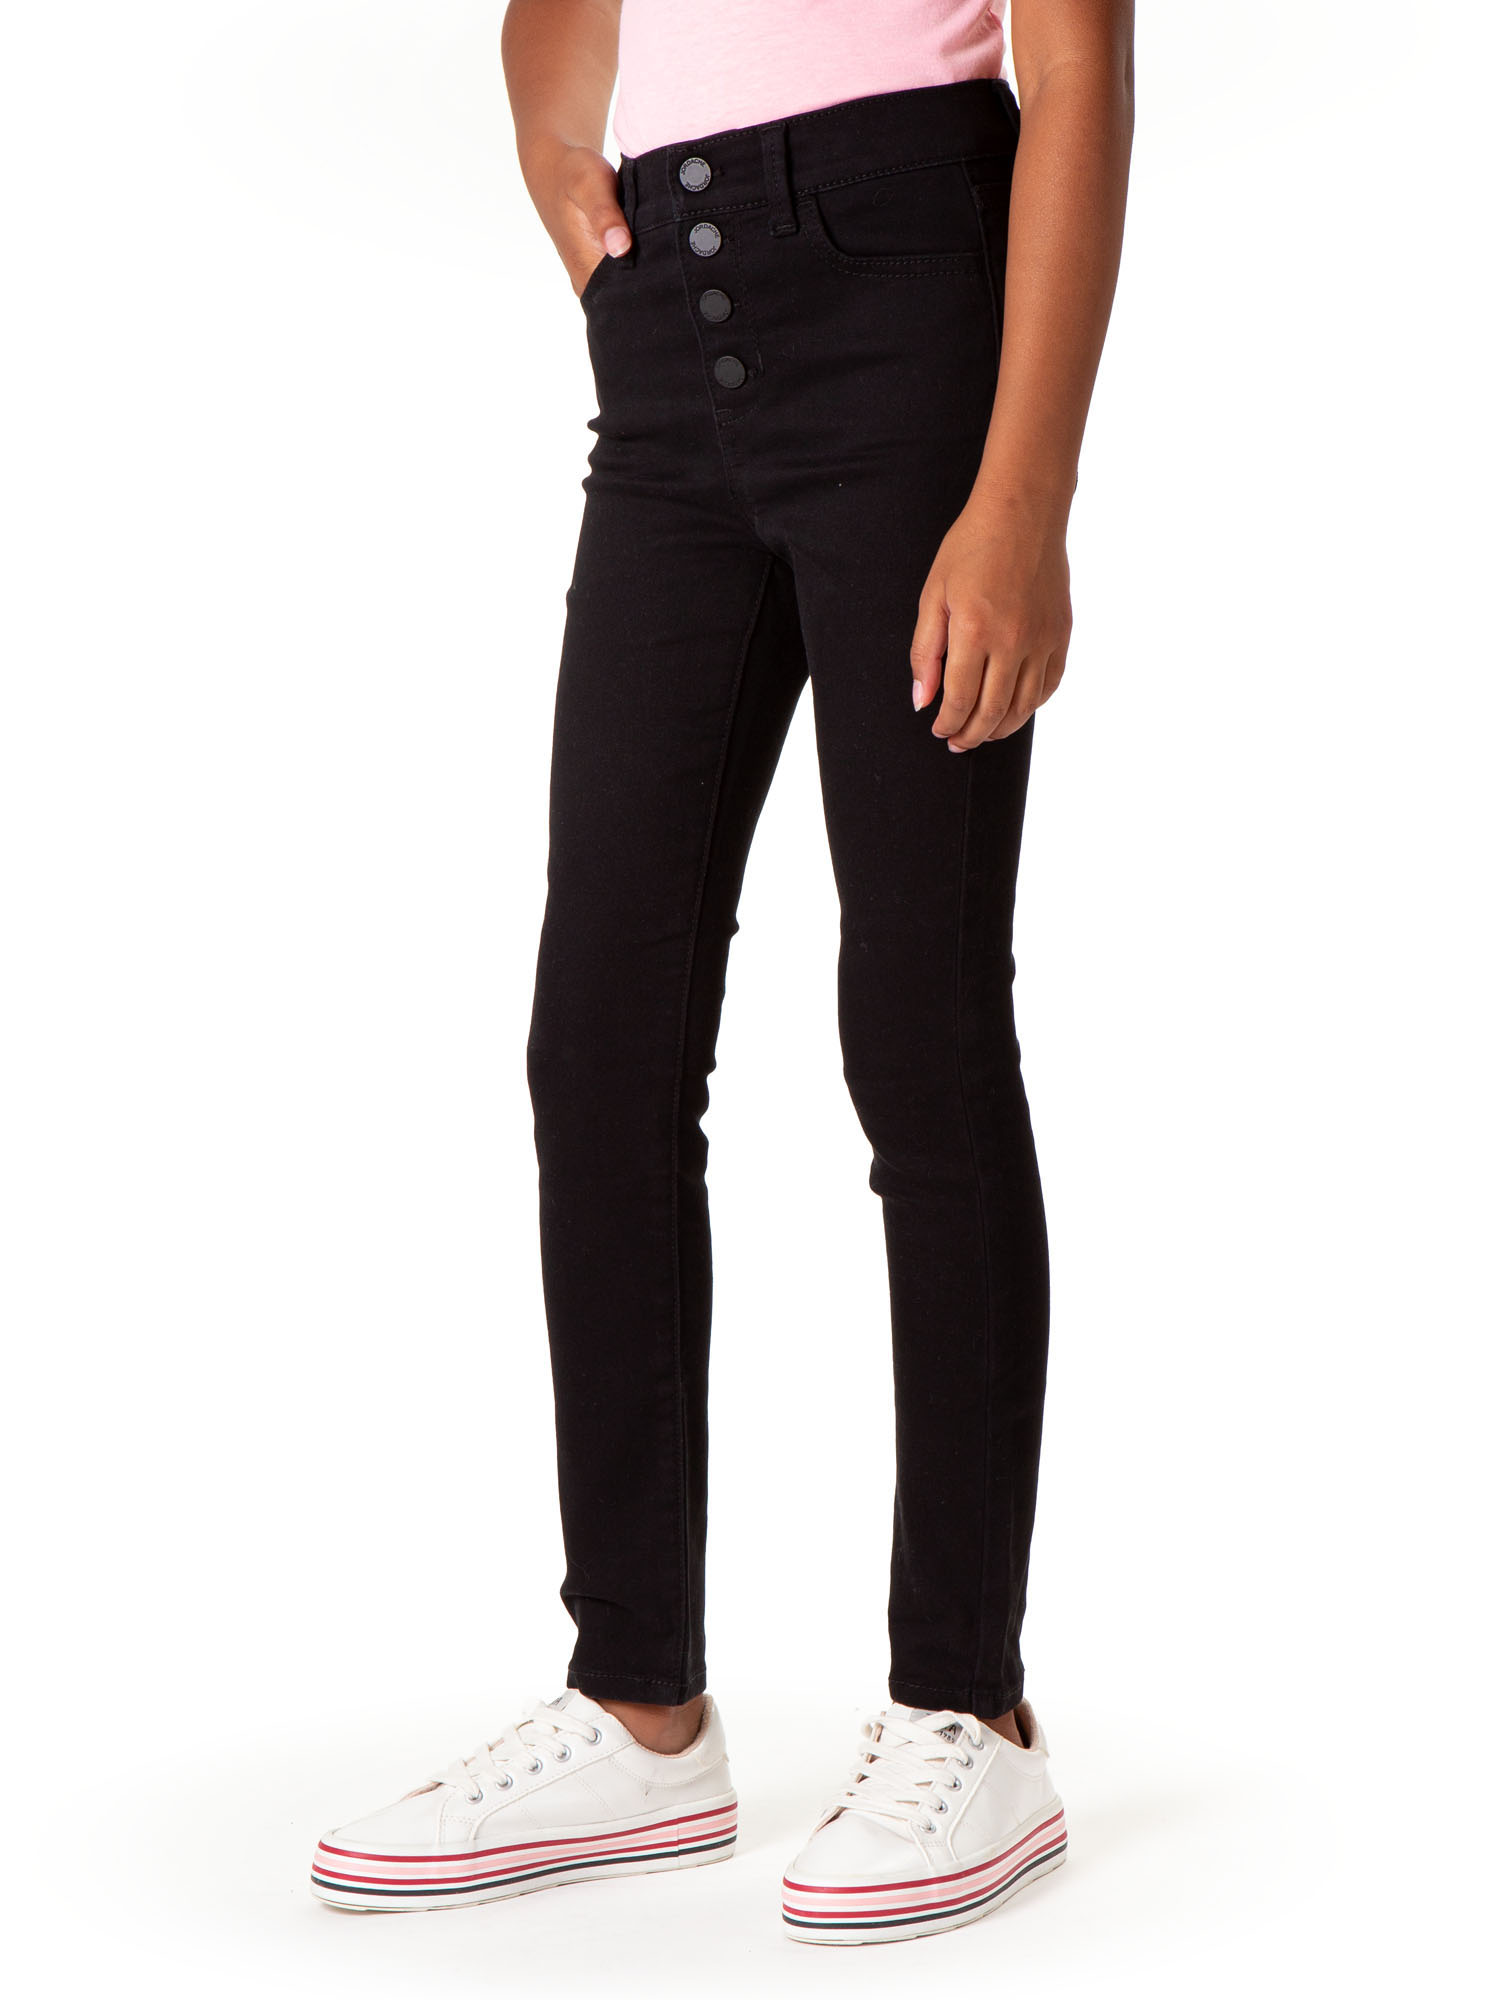 Jordache Girls Super Skinny High Rise Jeans, Sizes 5-18 & Slim - image 1 of 5